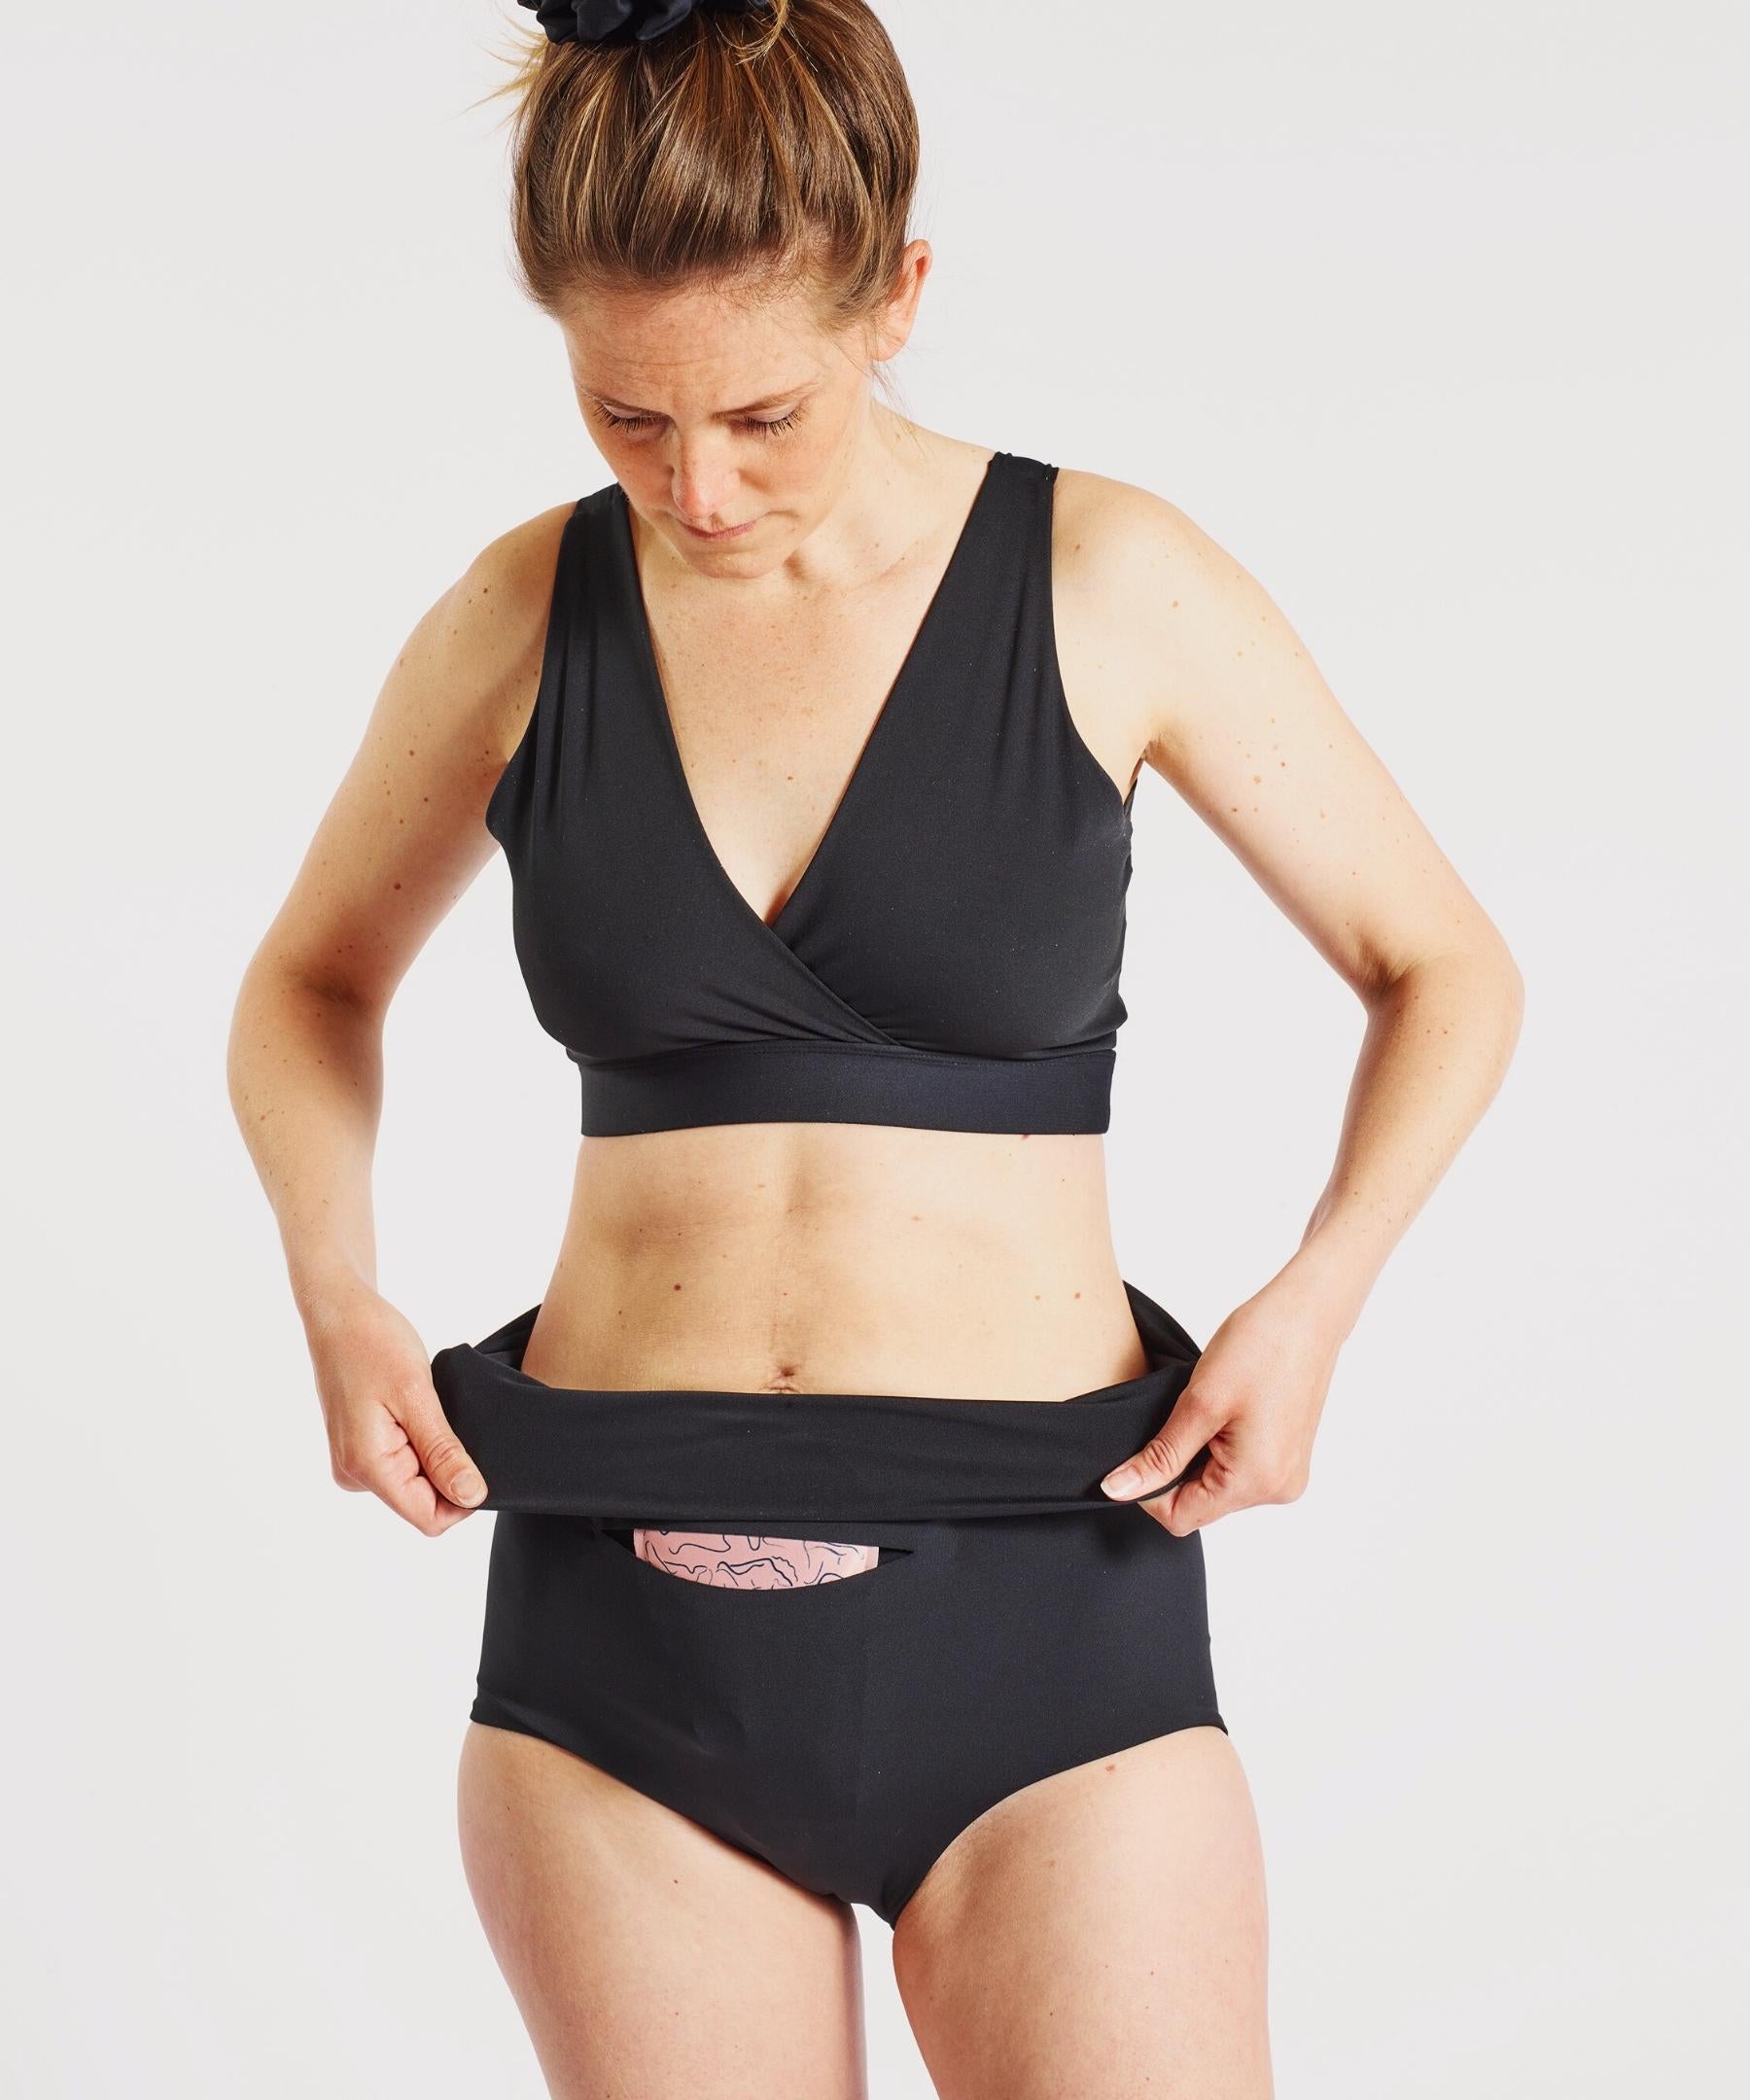 Woman in FourthWear Postpartum Recovery Underwear folding over waist